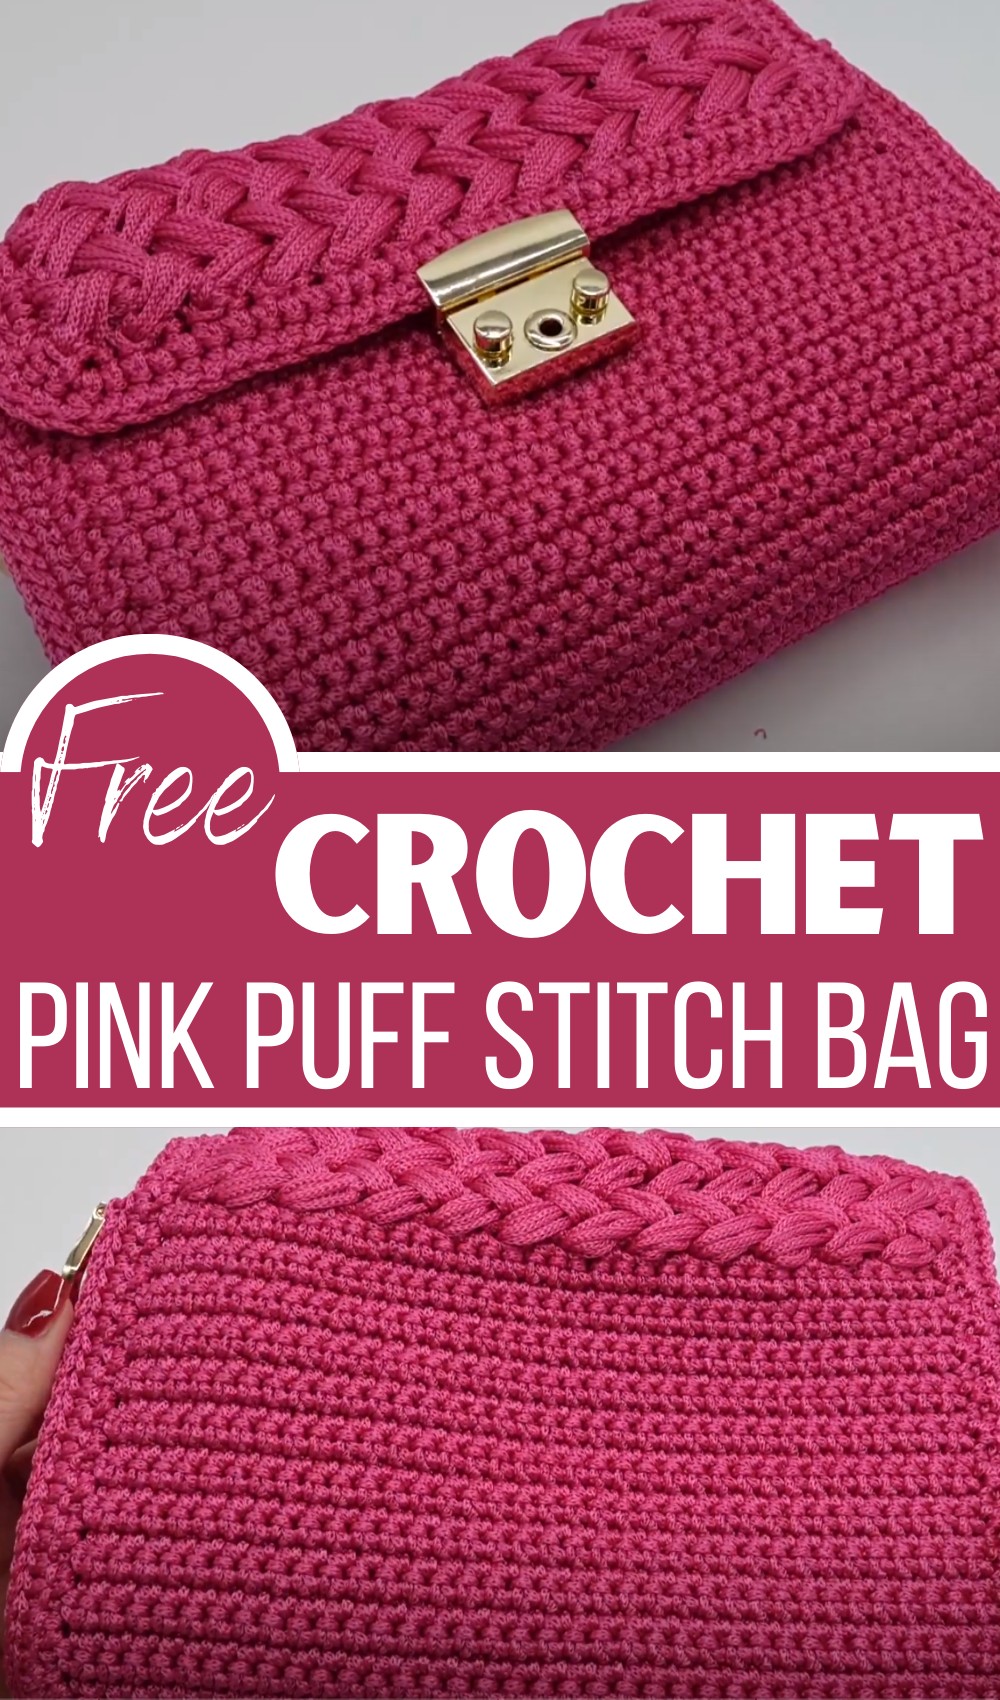 Pink Puff Stitch Crochet Bag